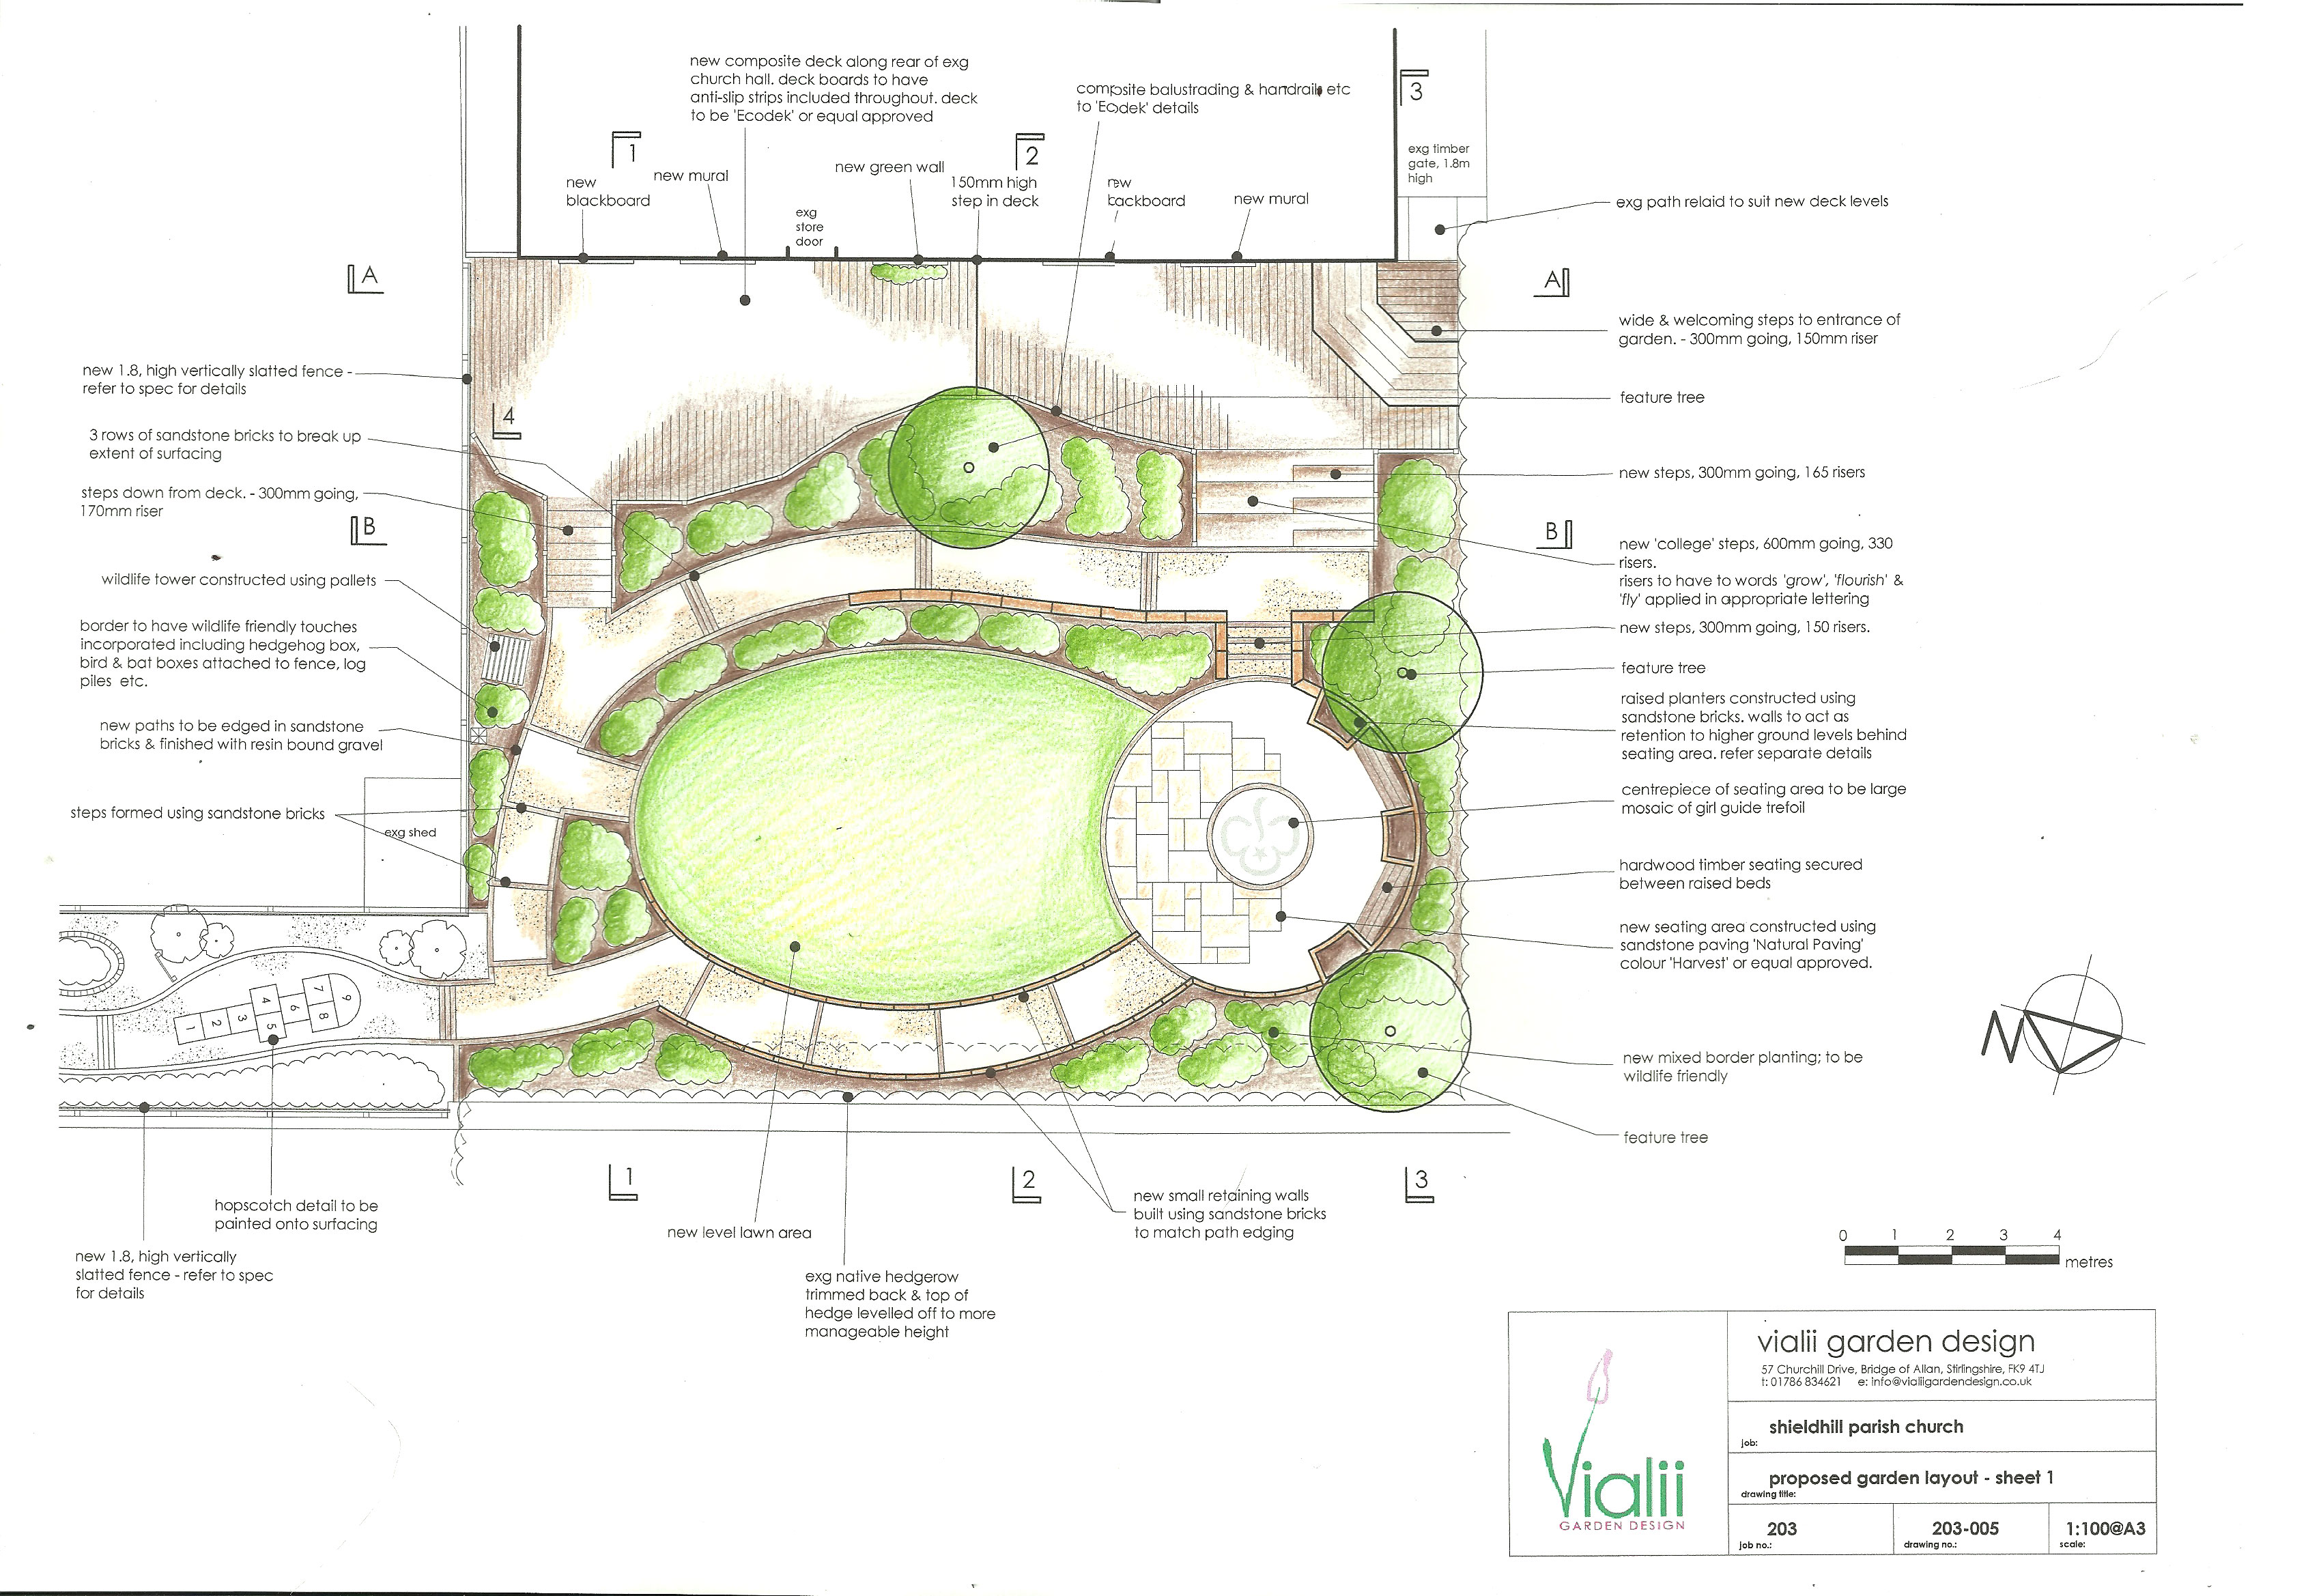 Our design for the Shieldhill garden